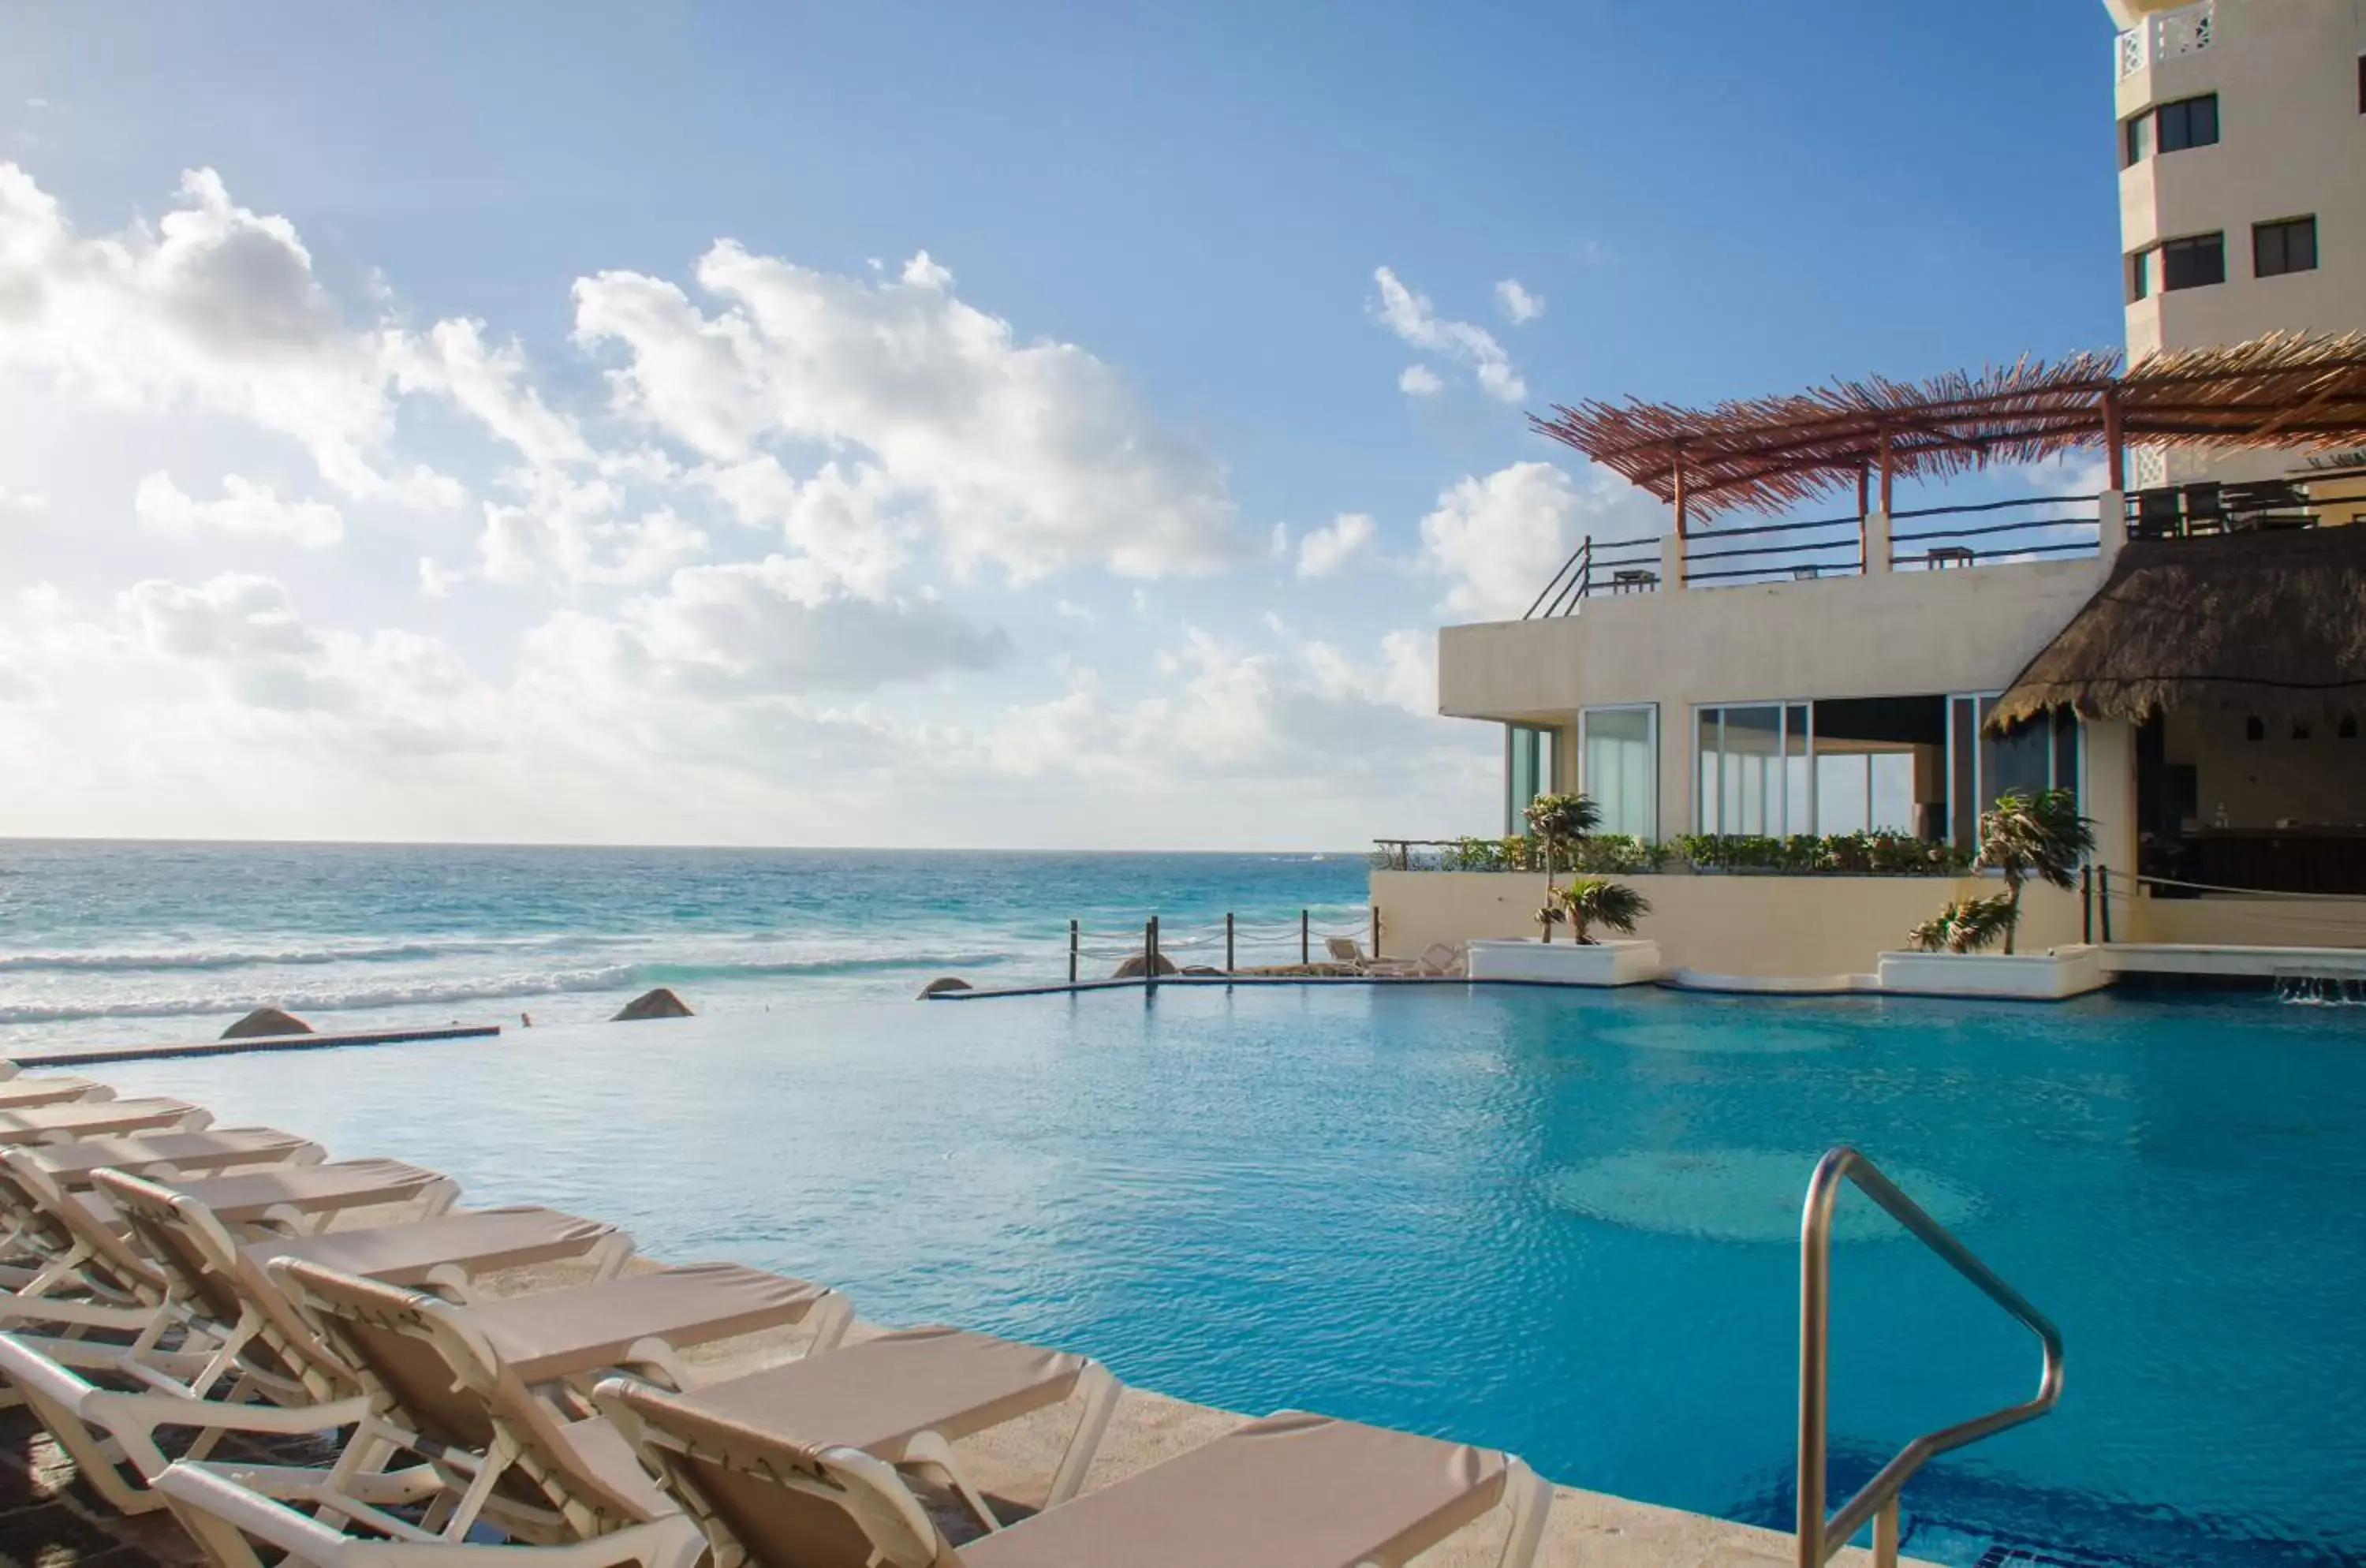 Swimming Pool in BSEA Cancun Plaza Hotel